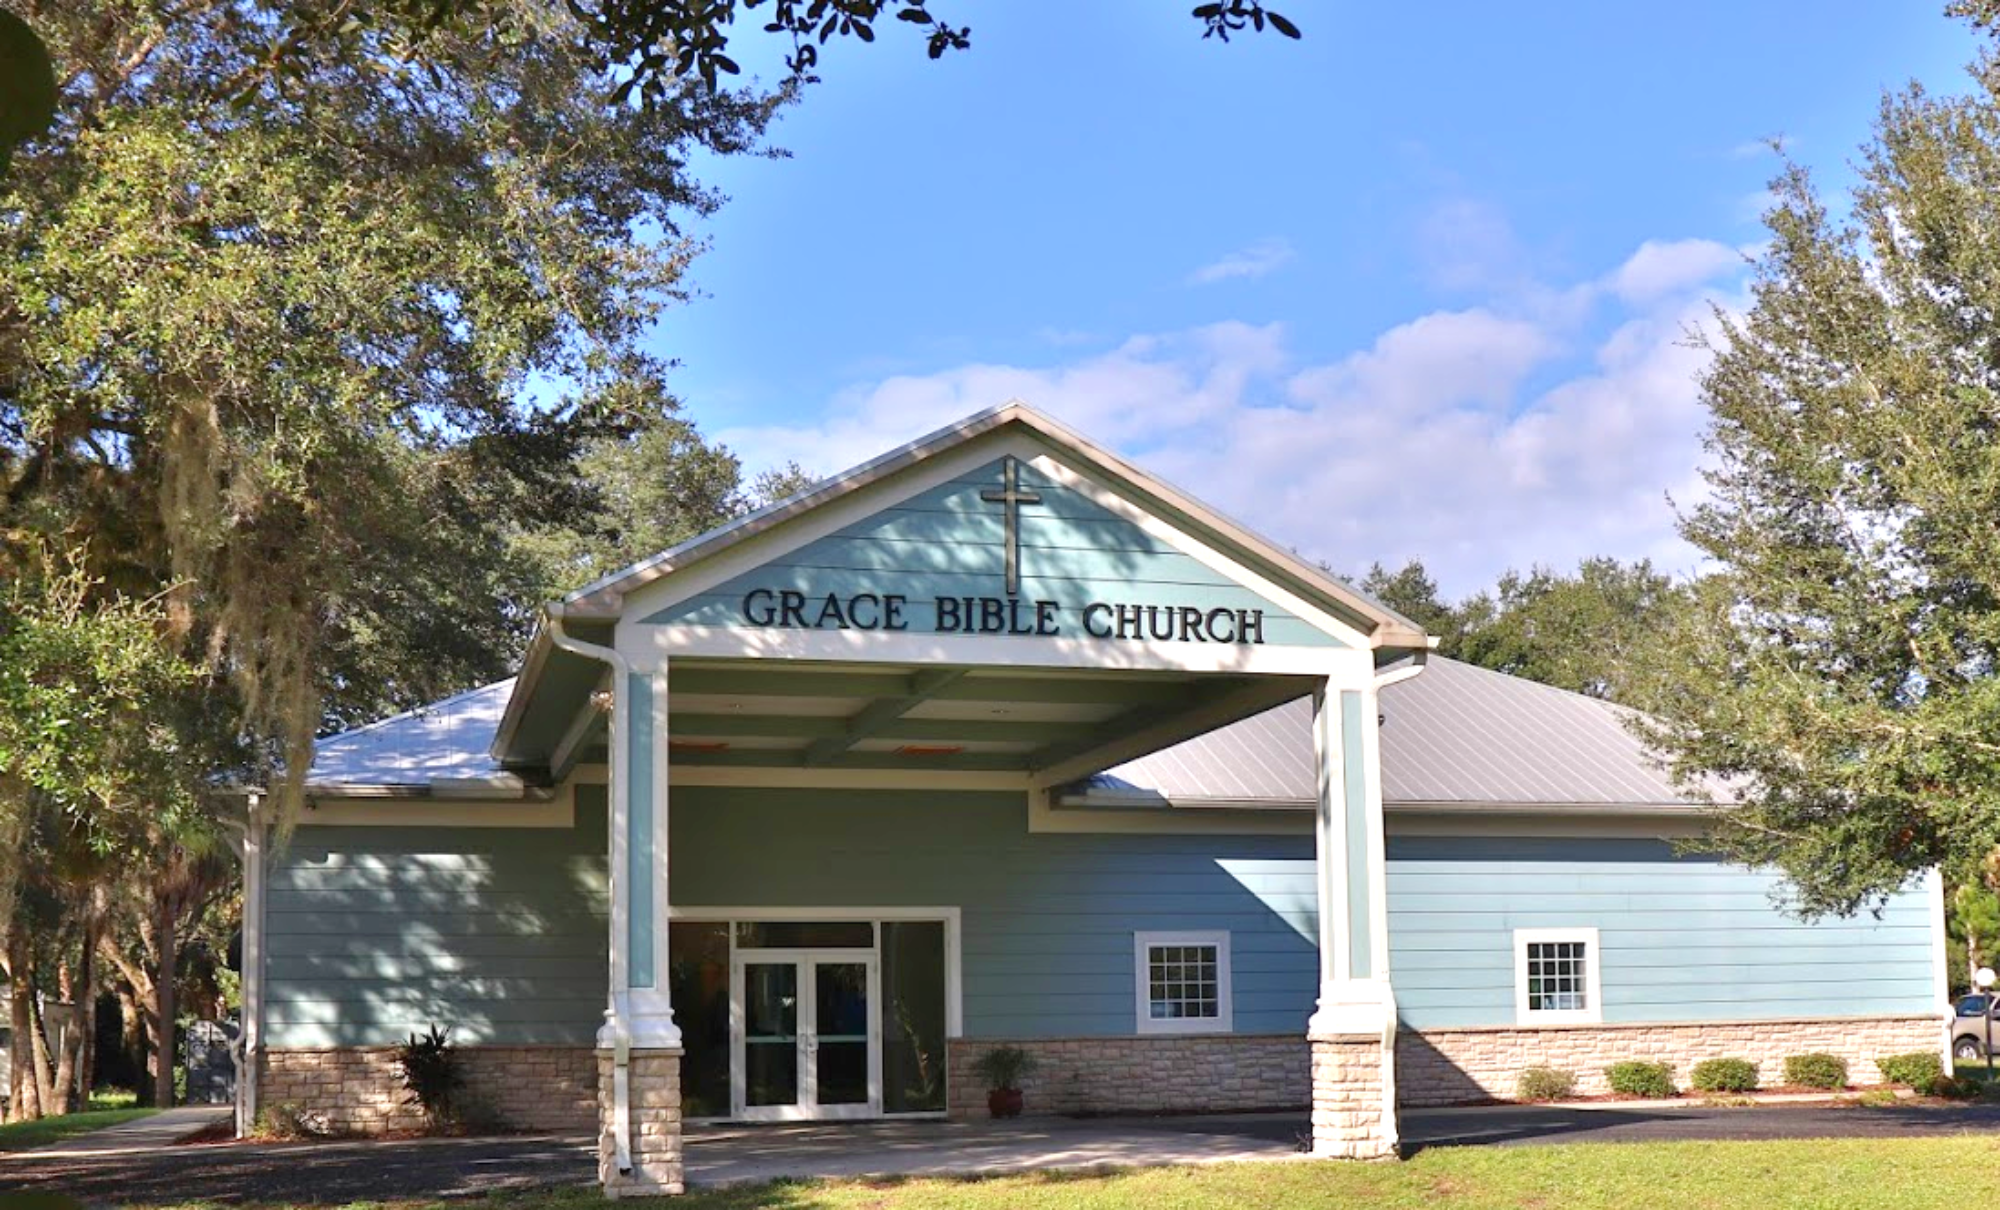 Grace Bible Church of Port Charlotte, Florida